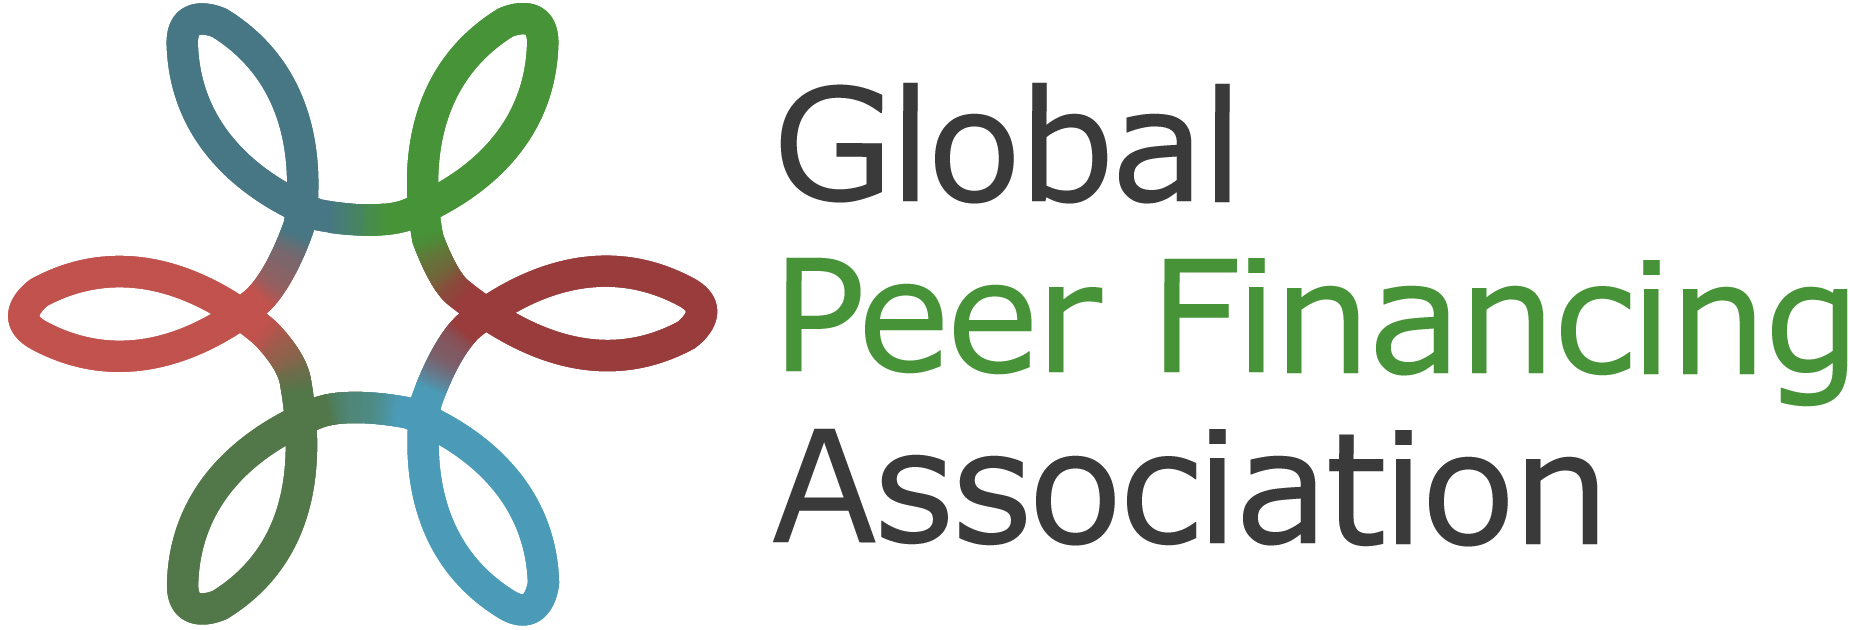 The Global Peer Financing Association (GPFA)